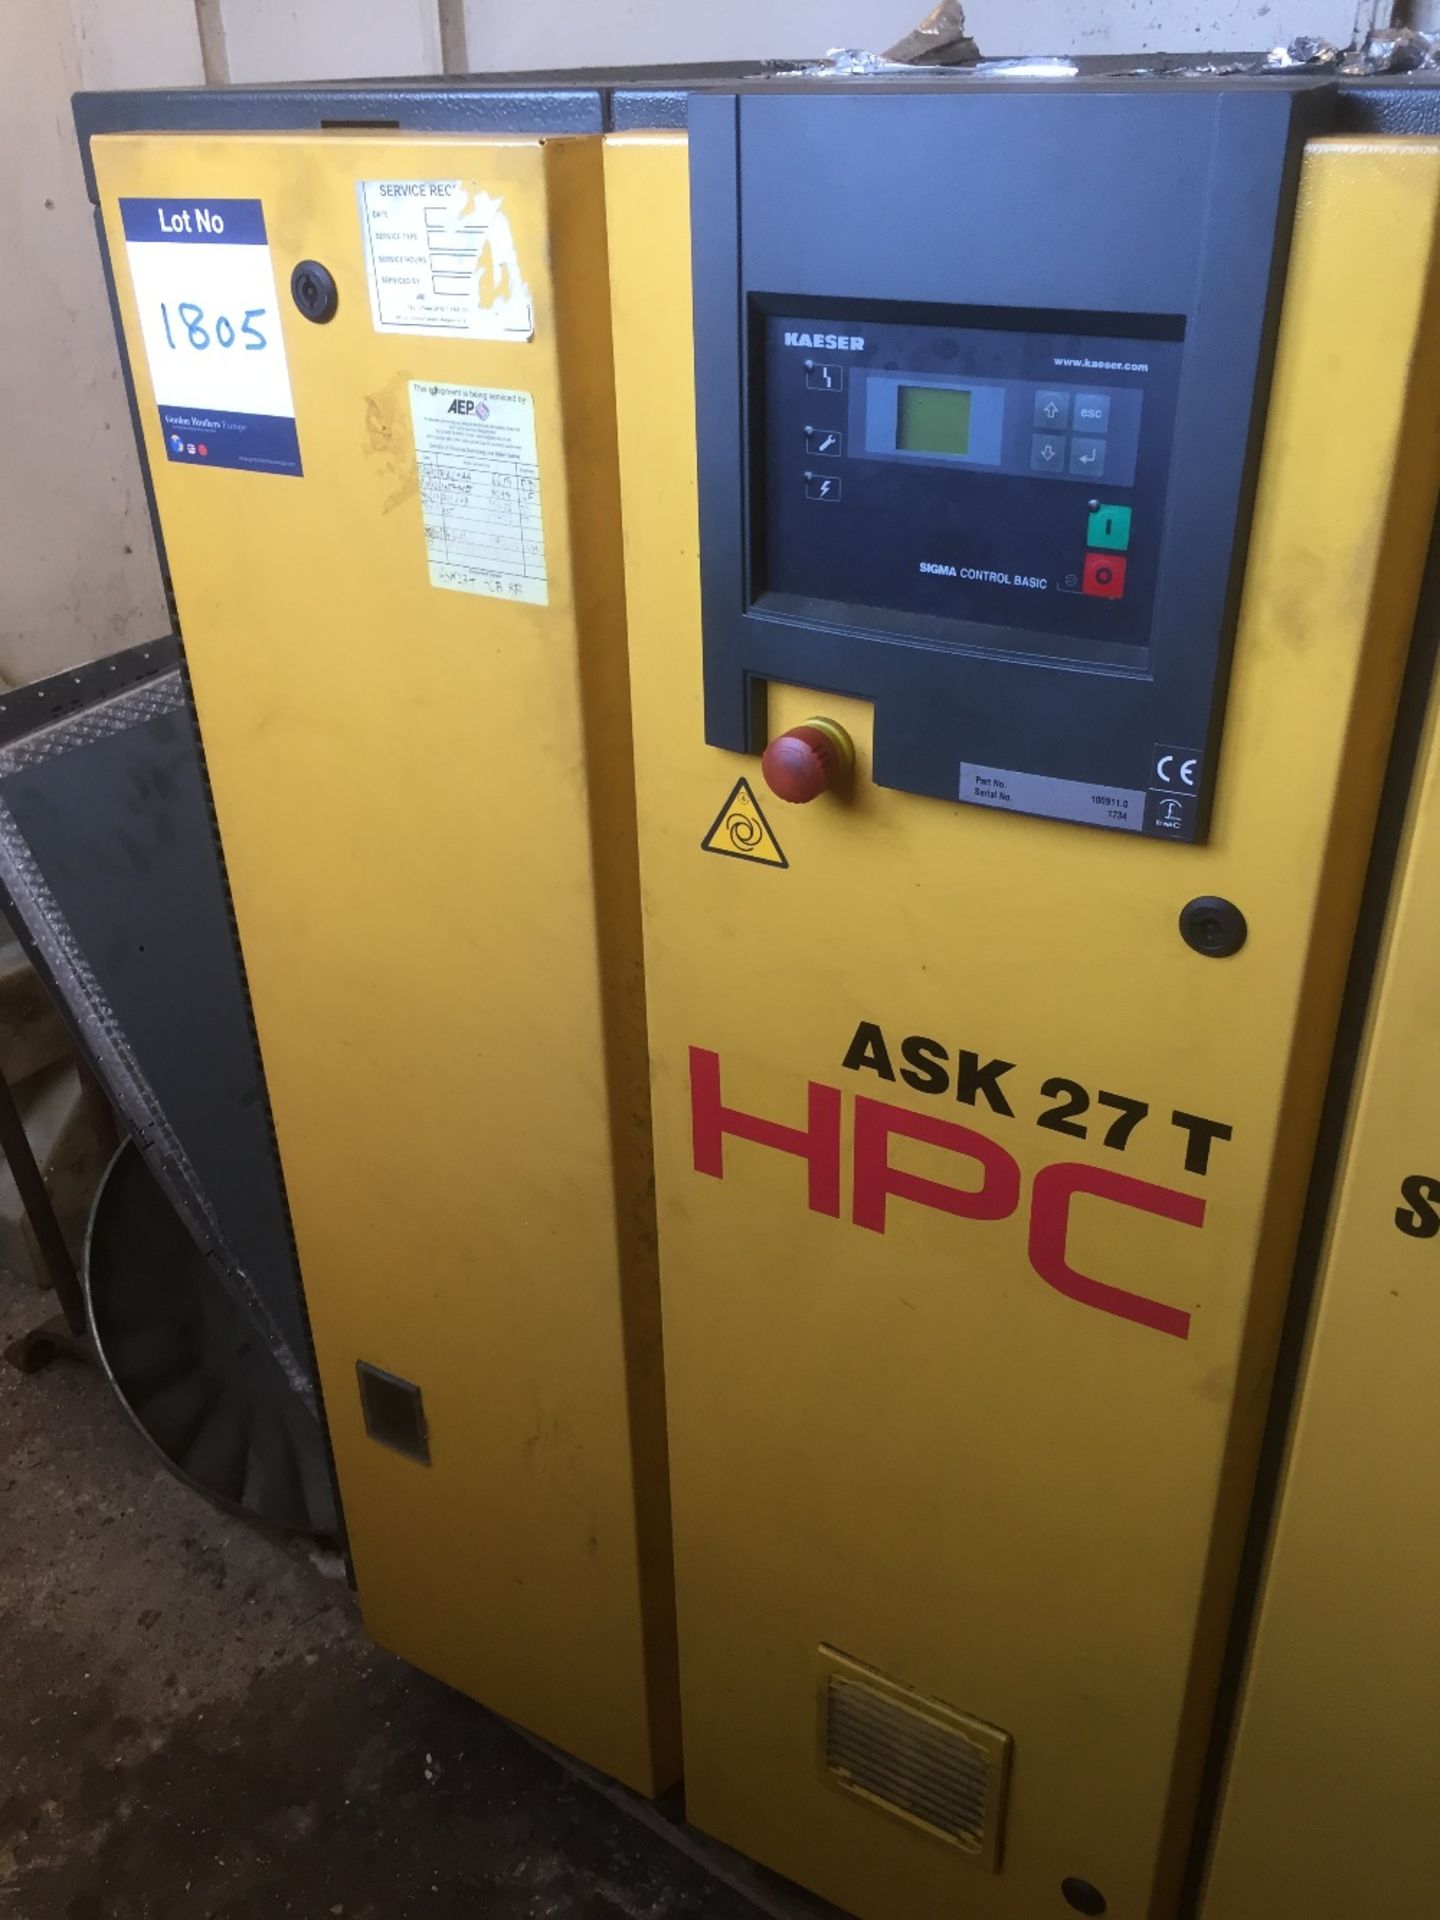 HPC Kaeser ASK 27T packaged air compressor
Serial